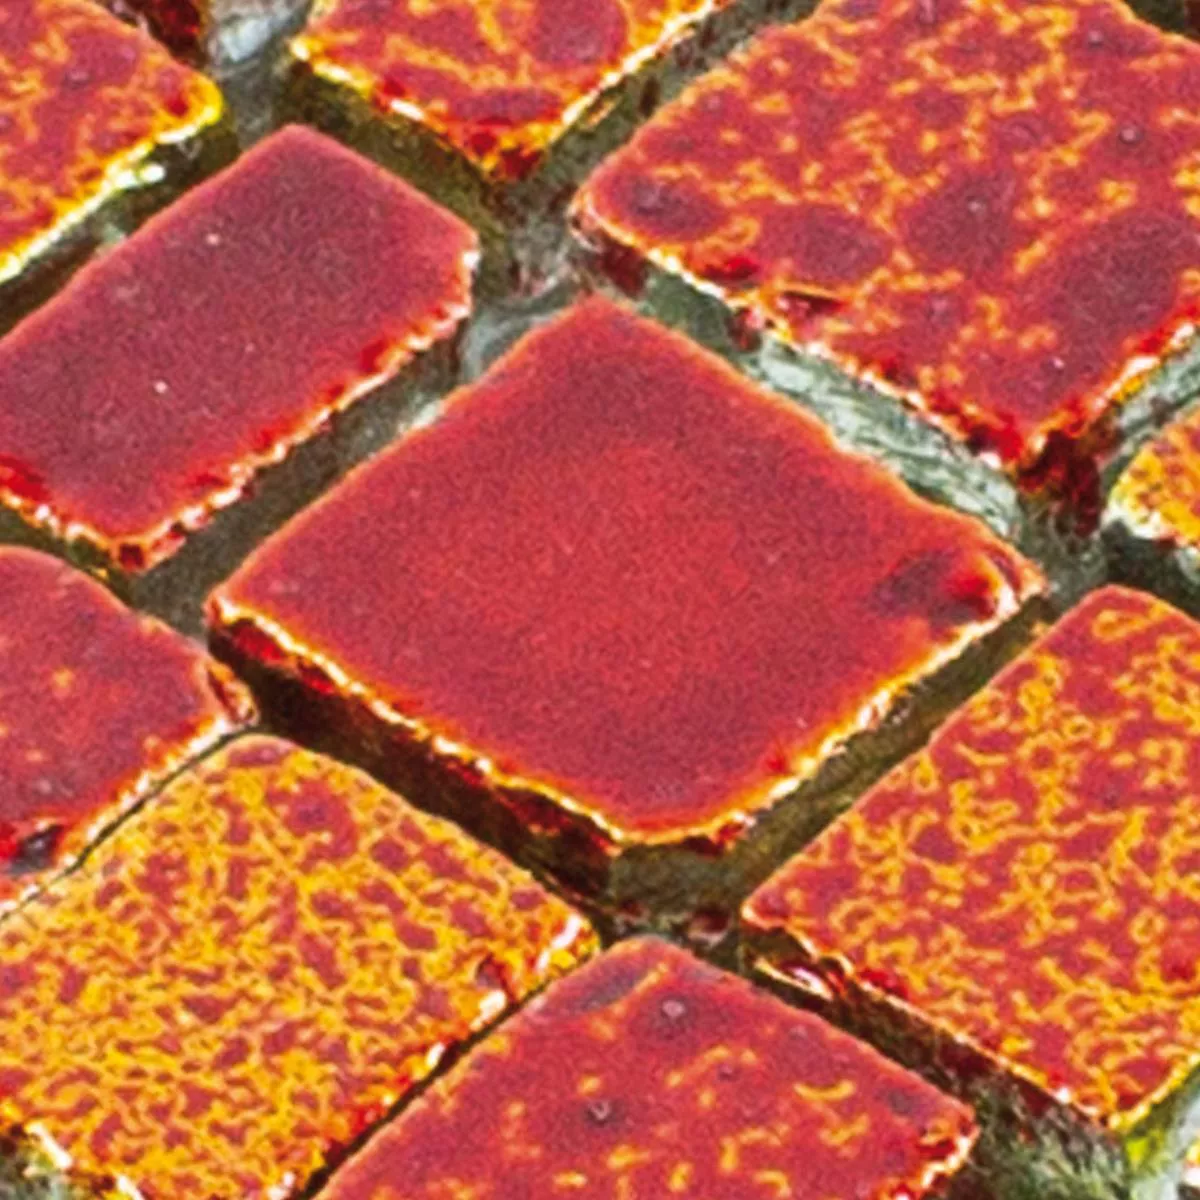 Sample Glass Mosaic Tiles Economy Red Yellow